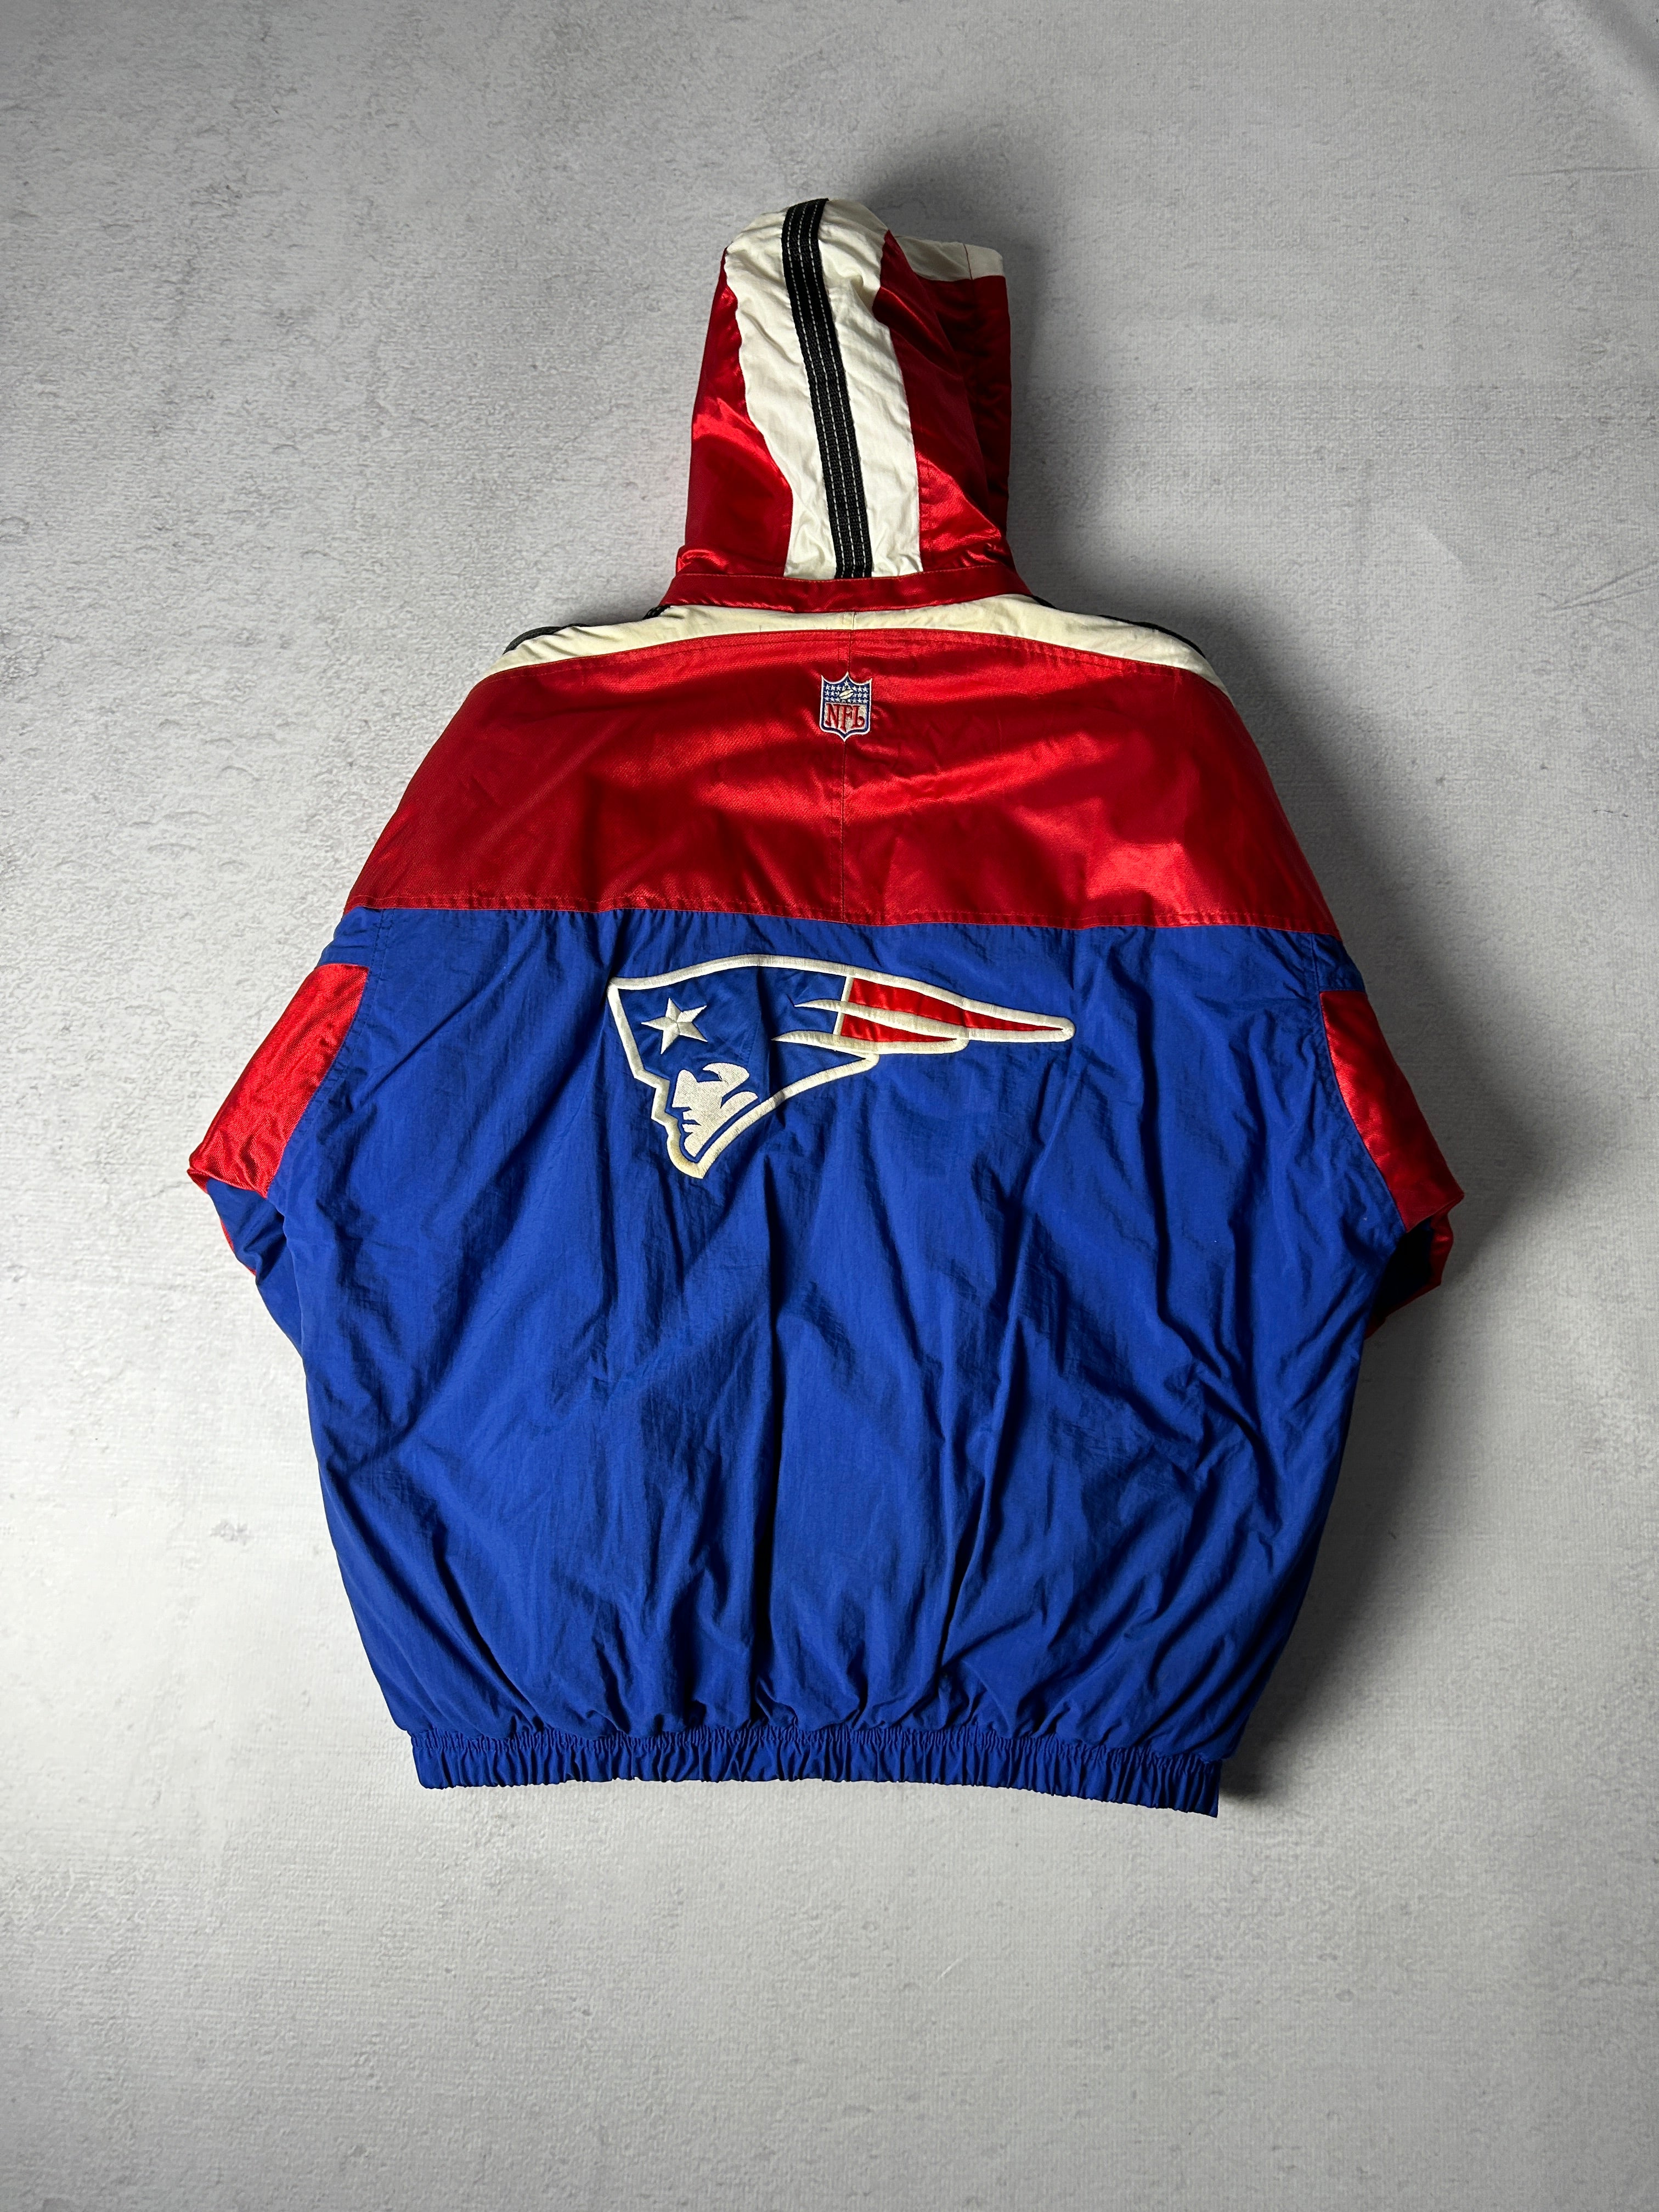 Vintage NFL New England Patriots Insulated Jacket - Men's XL